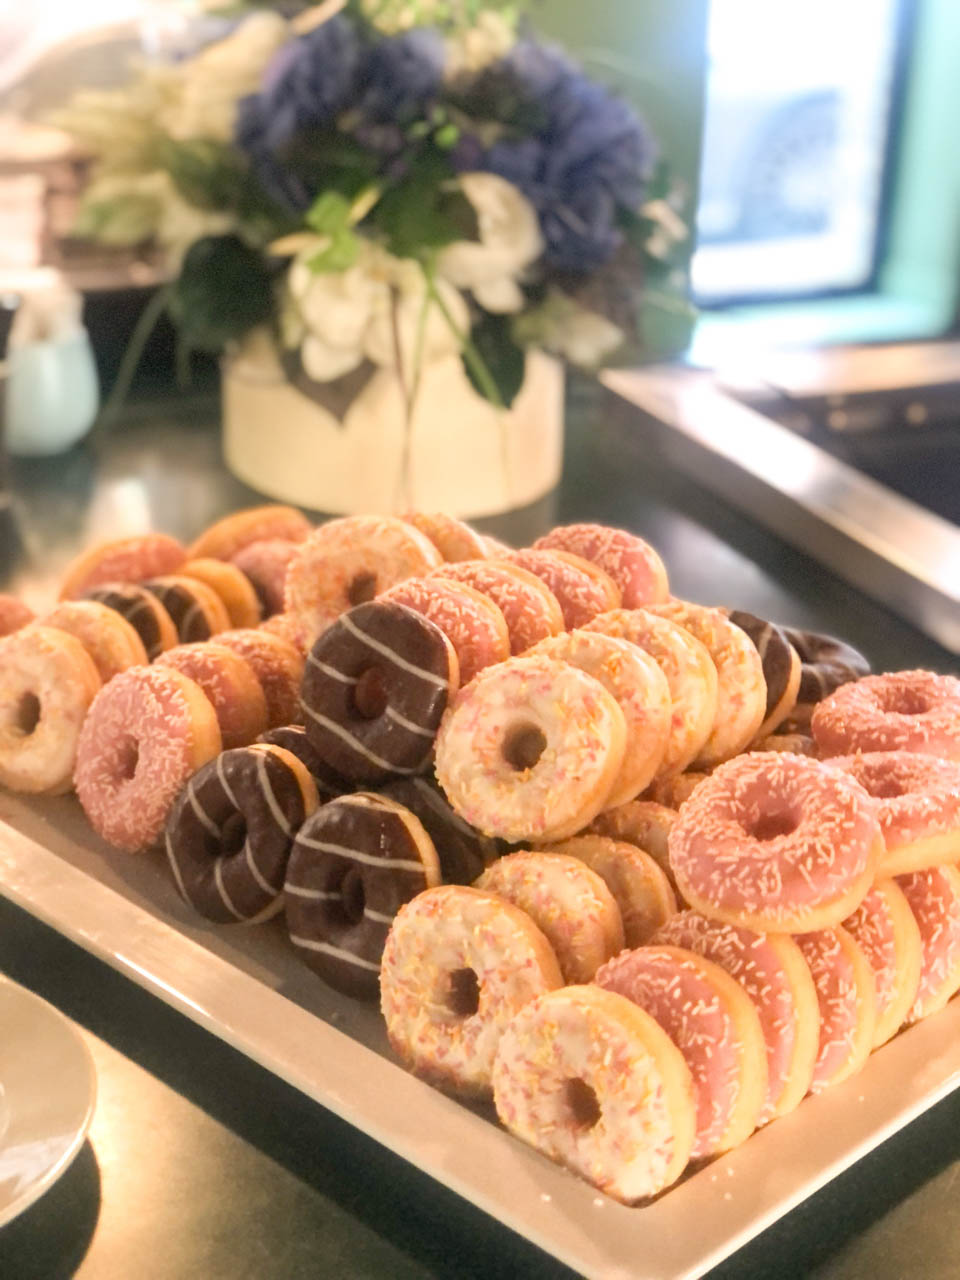 A tray of mini donuts